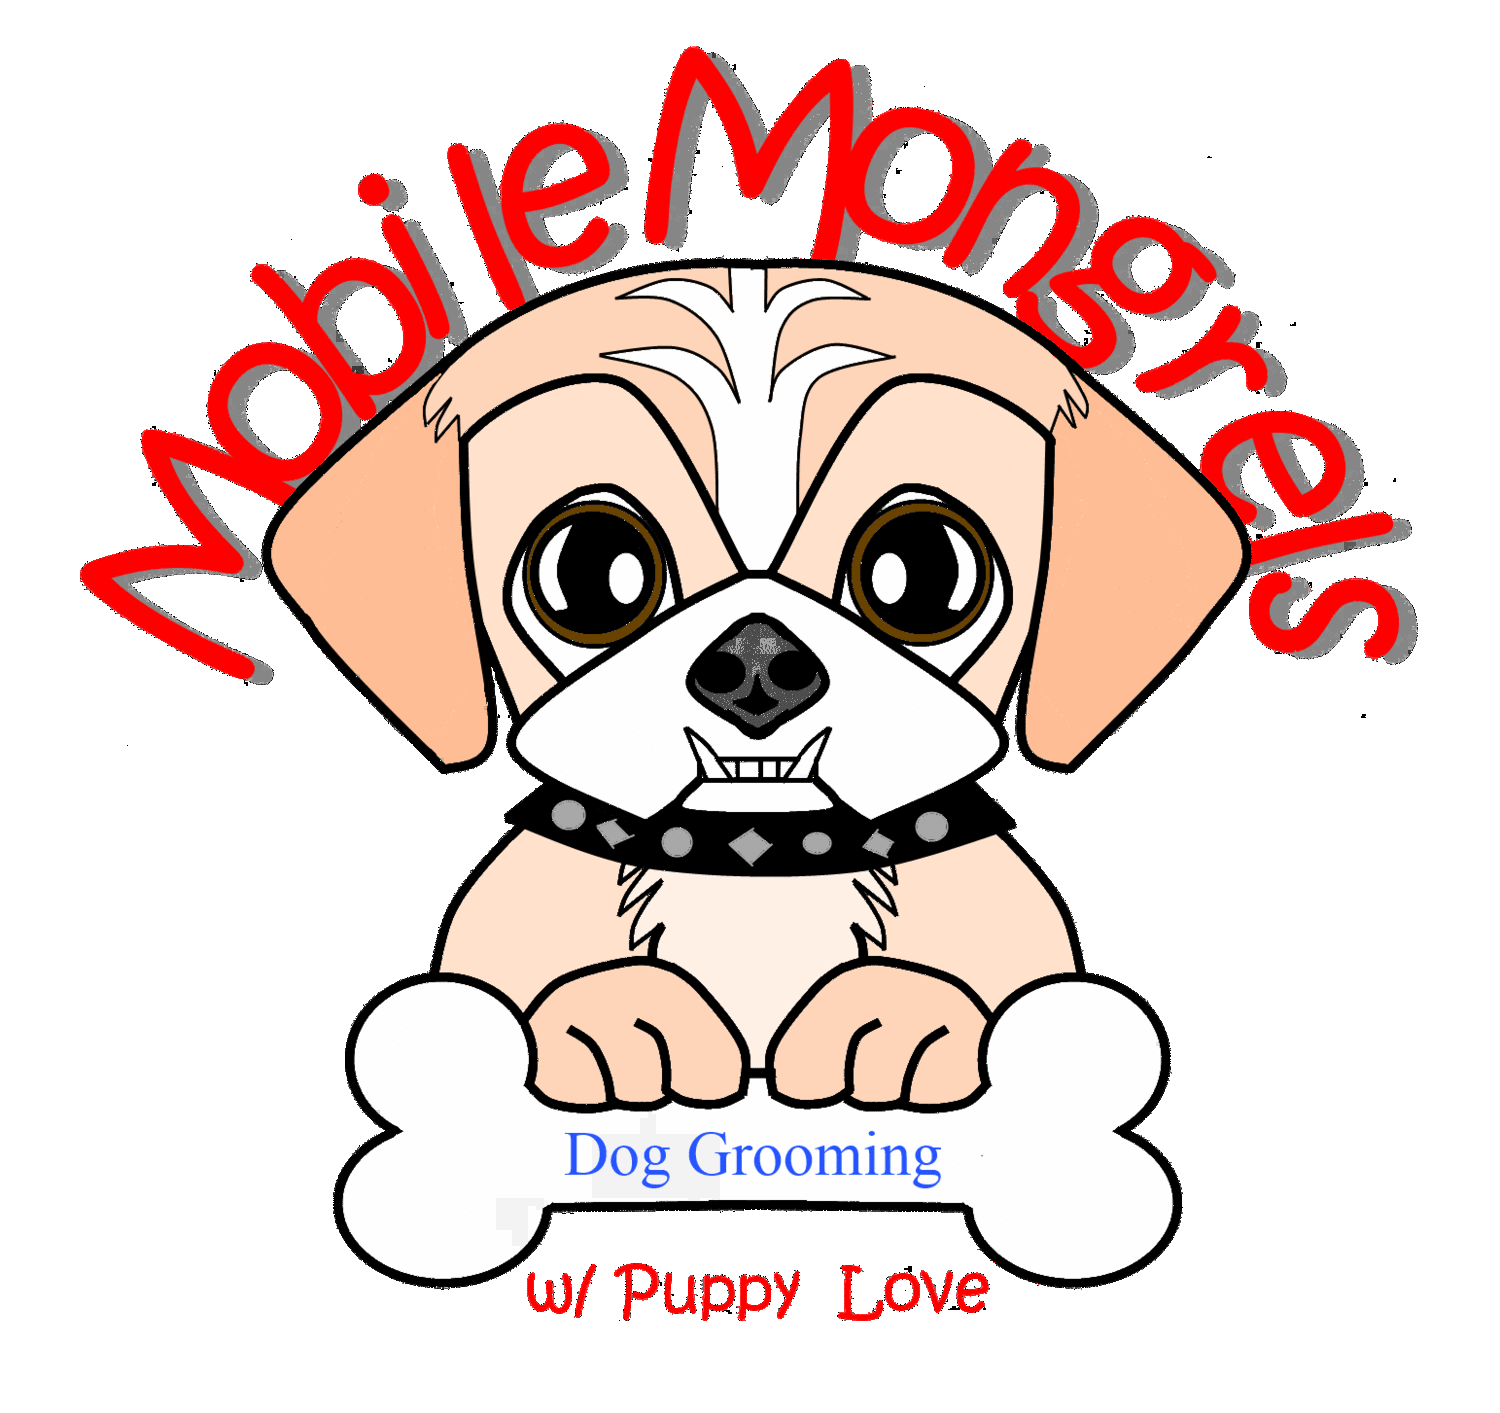 Mobile Mongrels, LLC